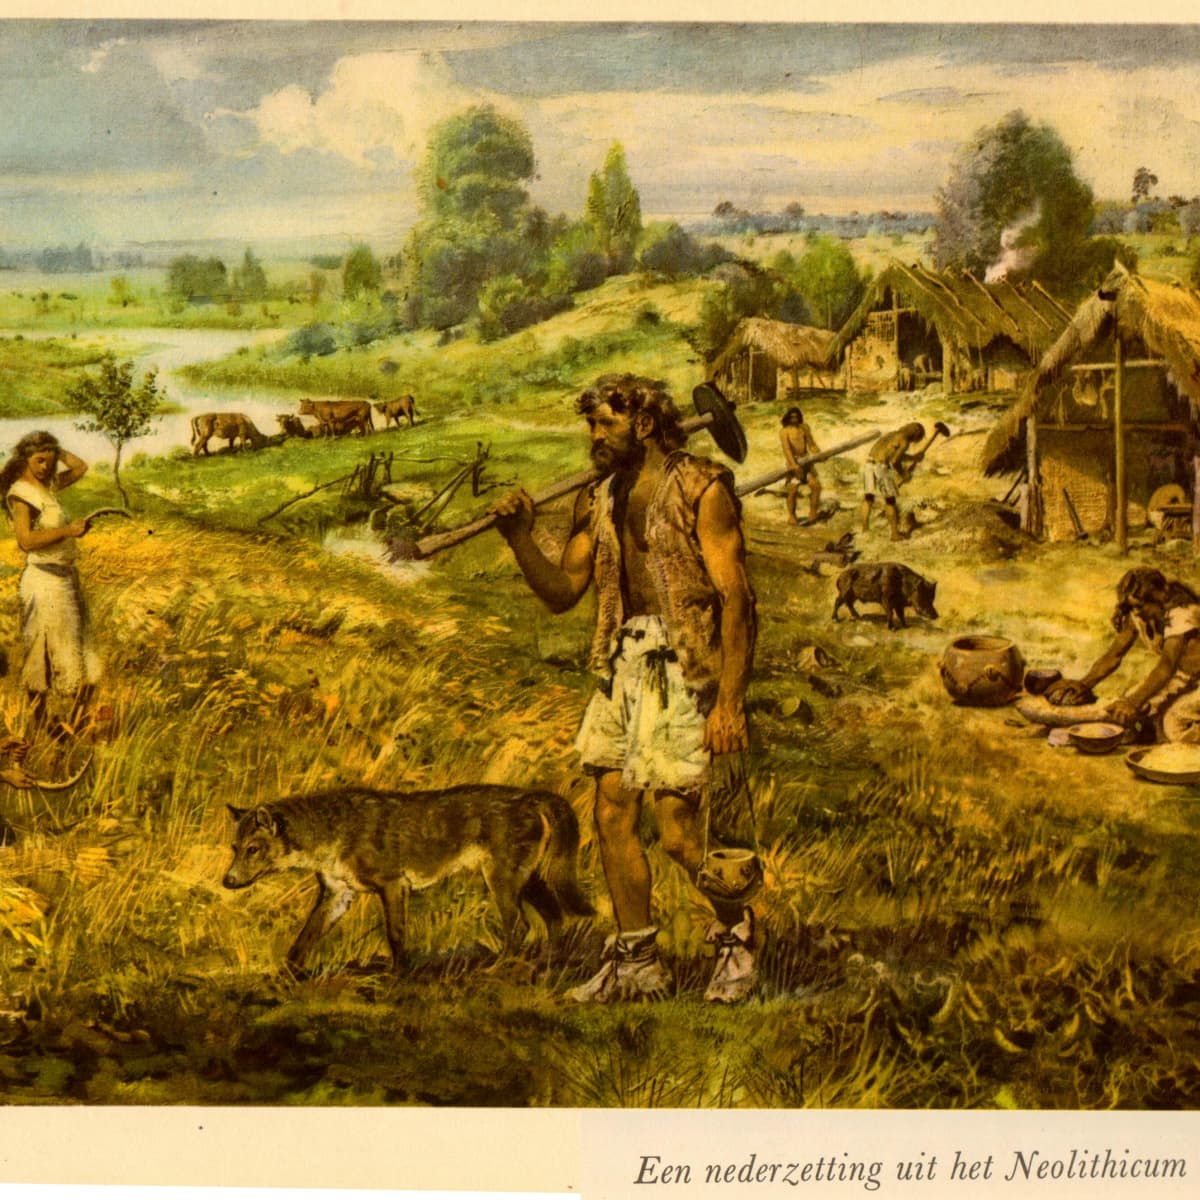 neolithic revolution domestication of animals